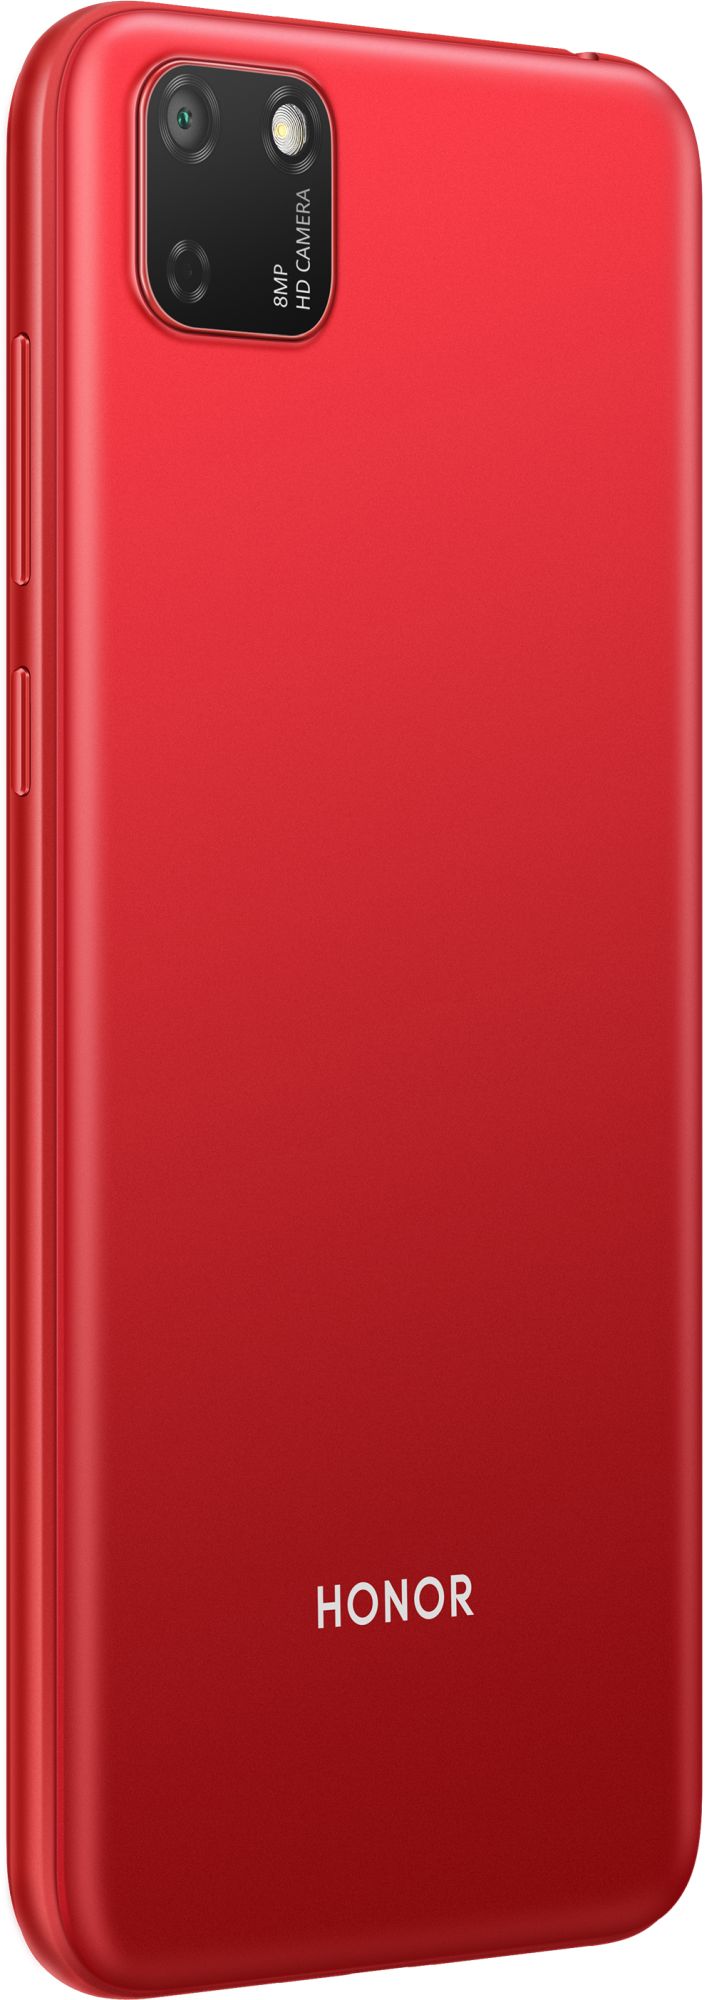 Huawei Honor 9S 32GB_otl Red